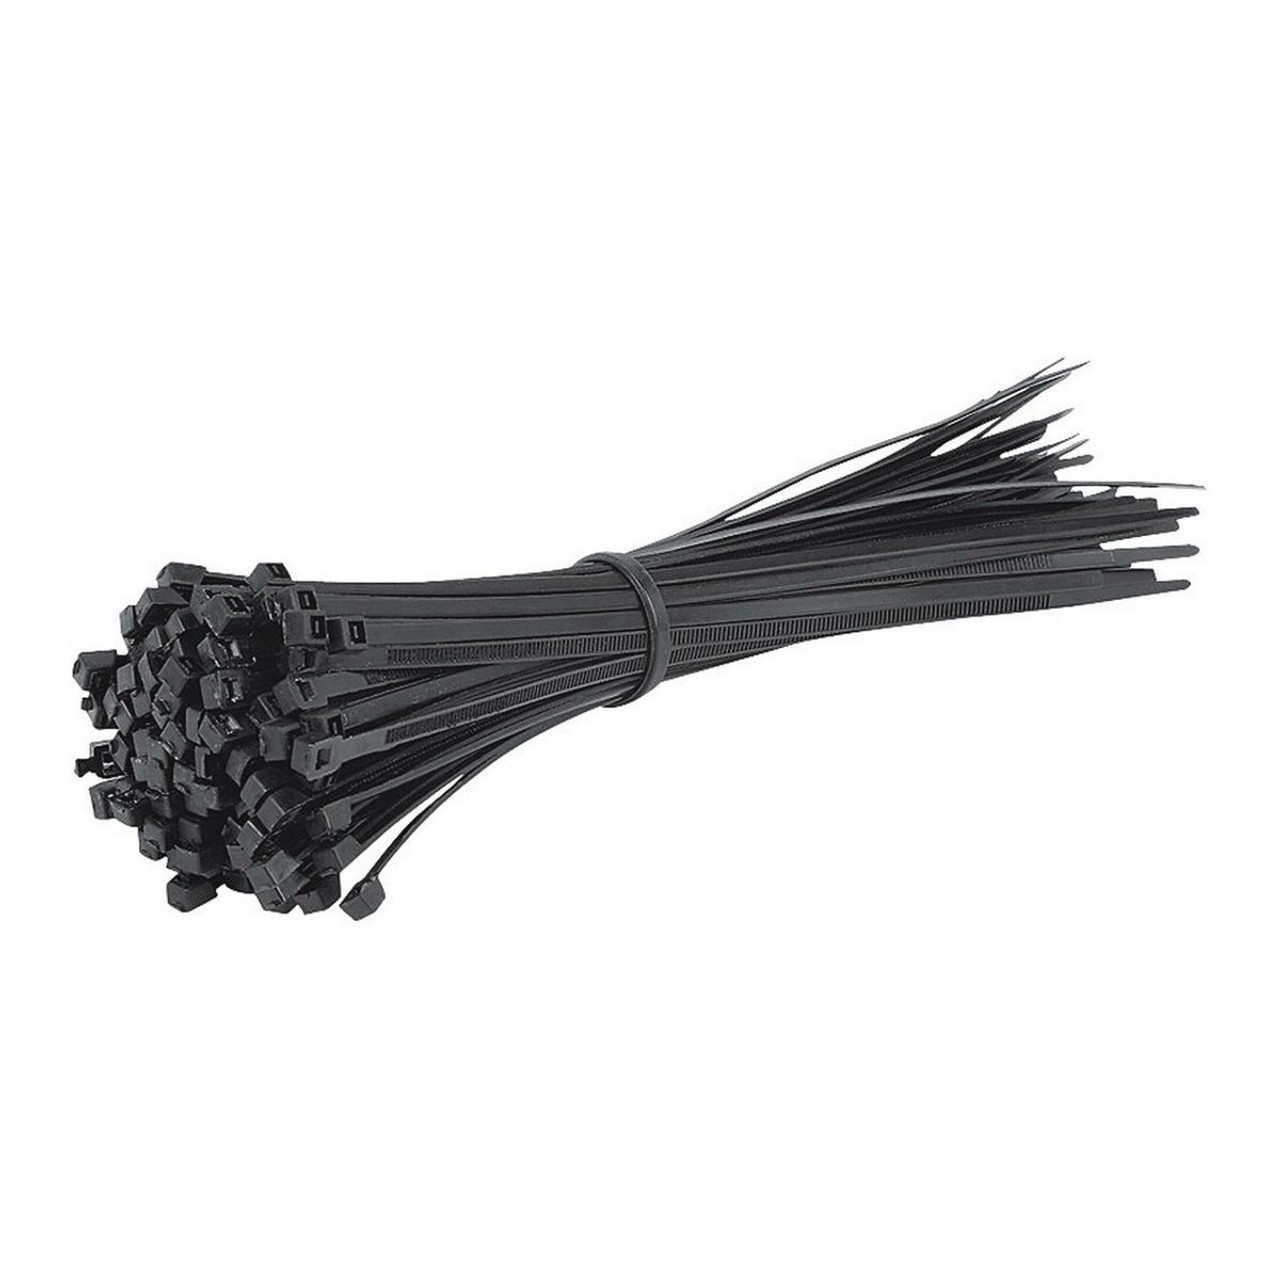 Cable Ties - UV Black 8" 18lb tensile, P/N N-8-18-0-M, Price is per thousand